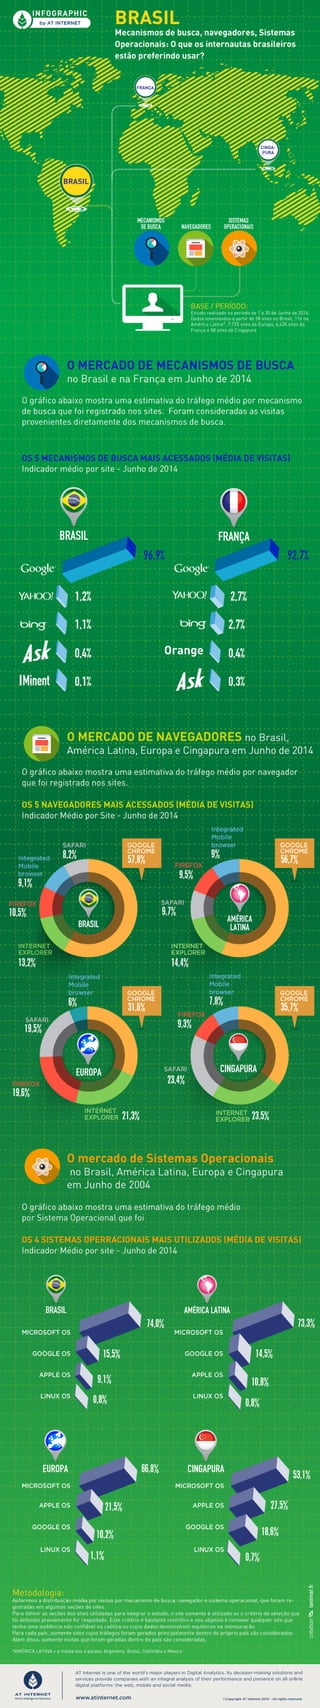 [Infográfico - Junho de 2014] Brasil: Mecanismos de busca, navegadores, Sistemas Operacionais